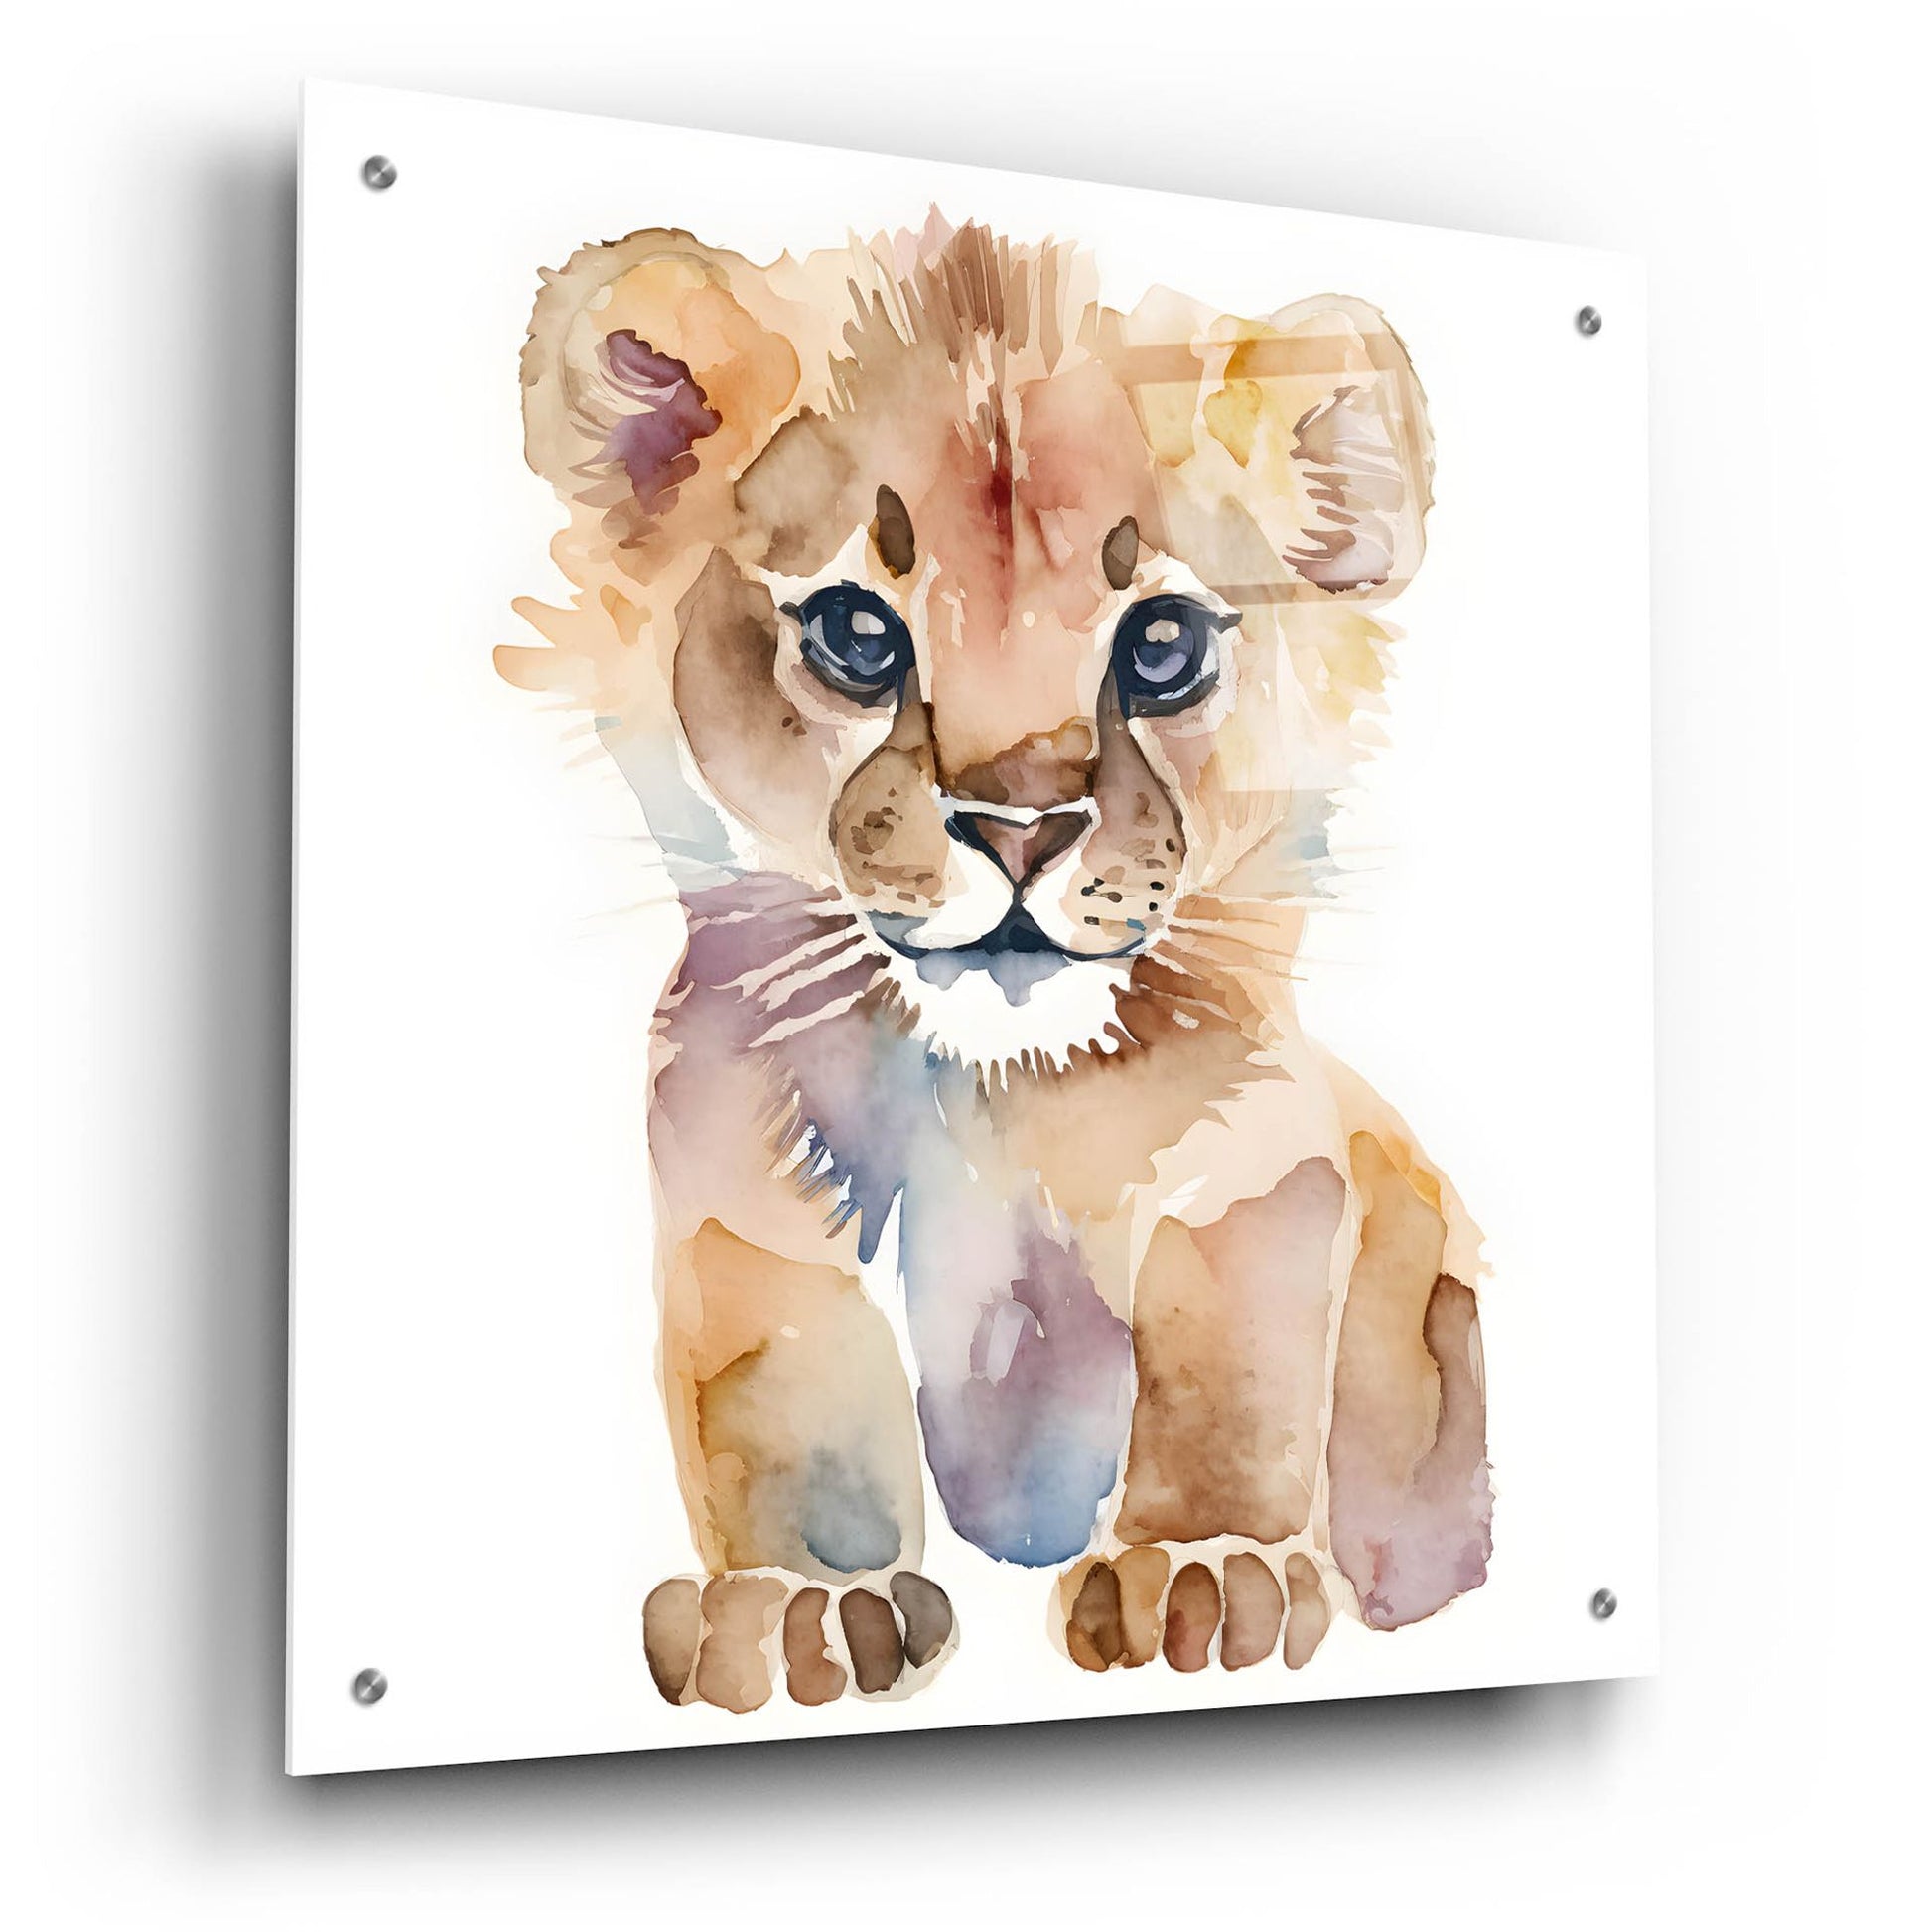 Epic Art 'Baby Lion' by Petals Prints Design, Acrylic Glass Wall Art,24x24